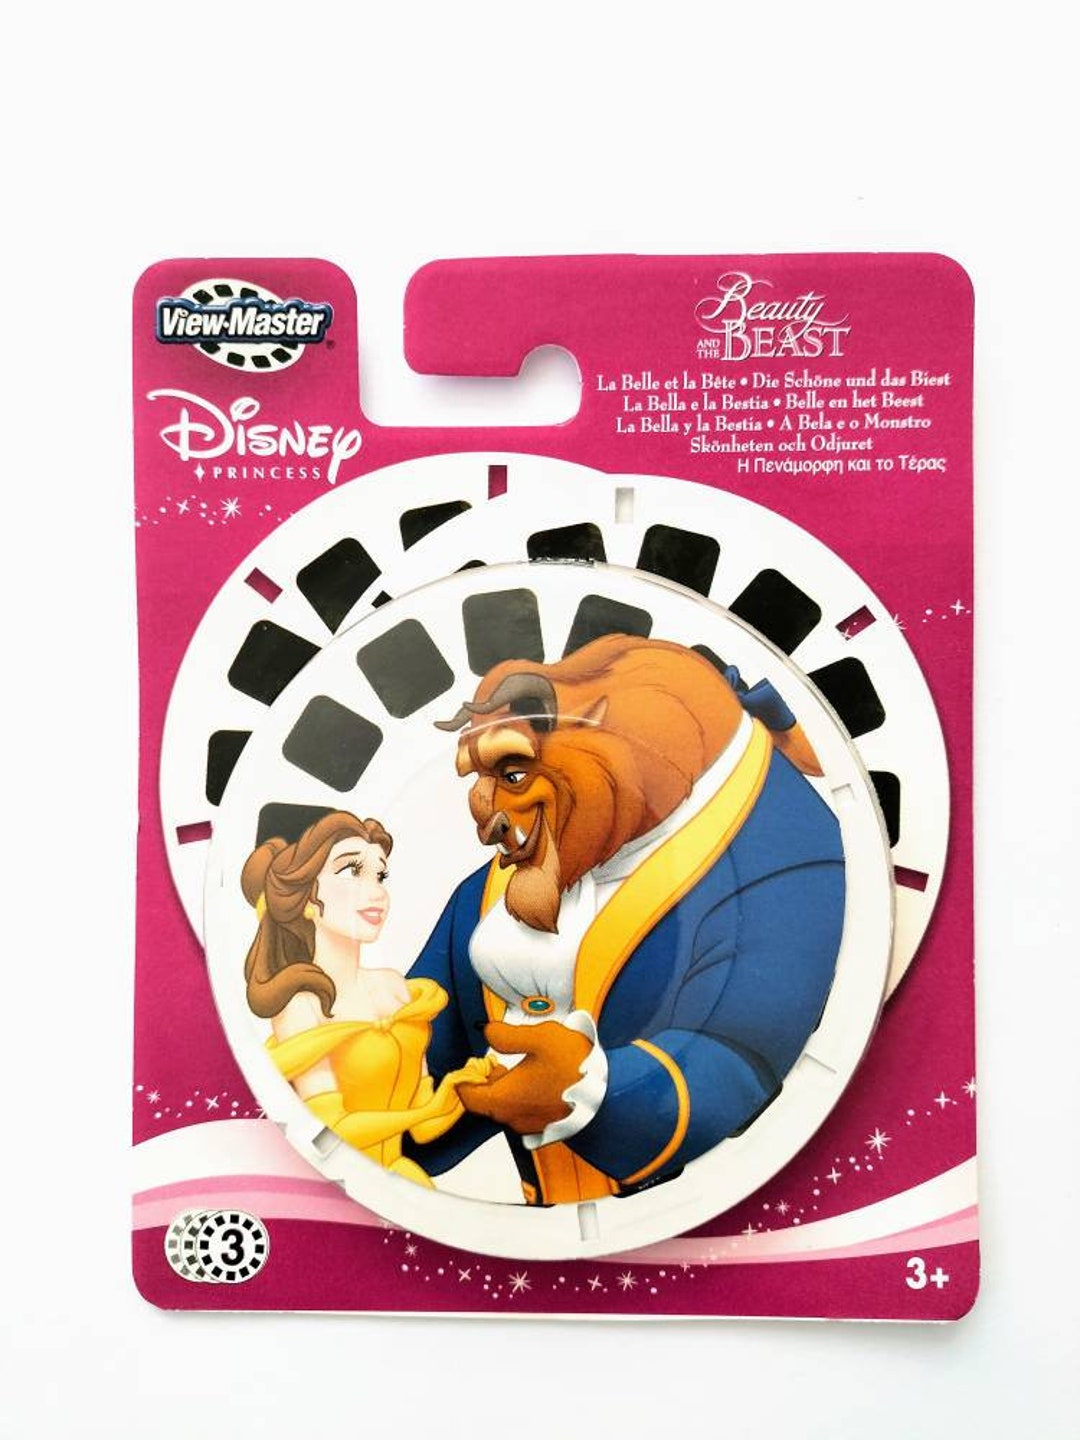 2006 Beauty and the Beast Mattel VIEW-MASTER Disney PRINCESS 3D